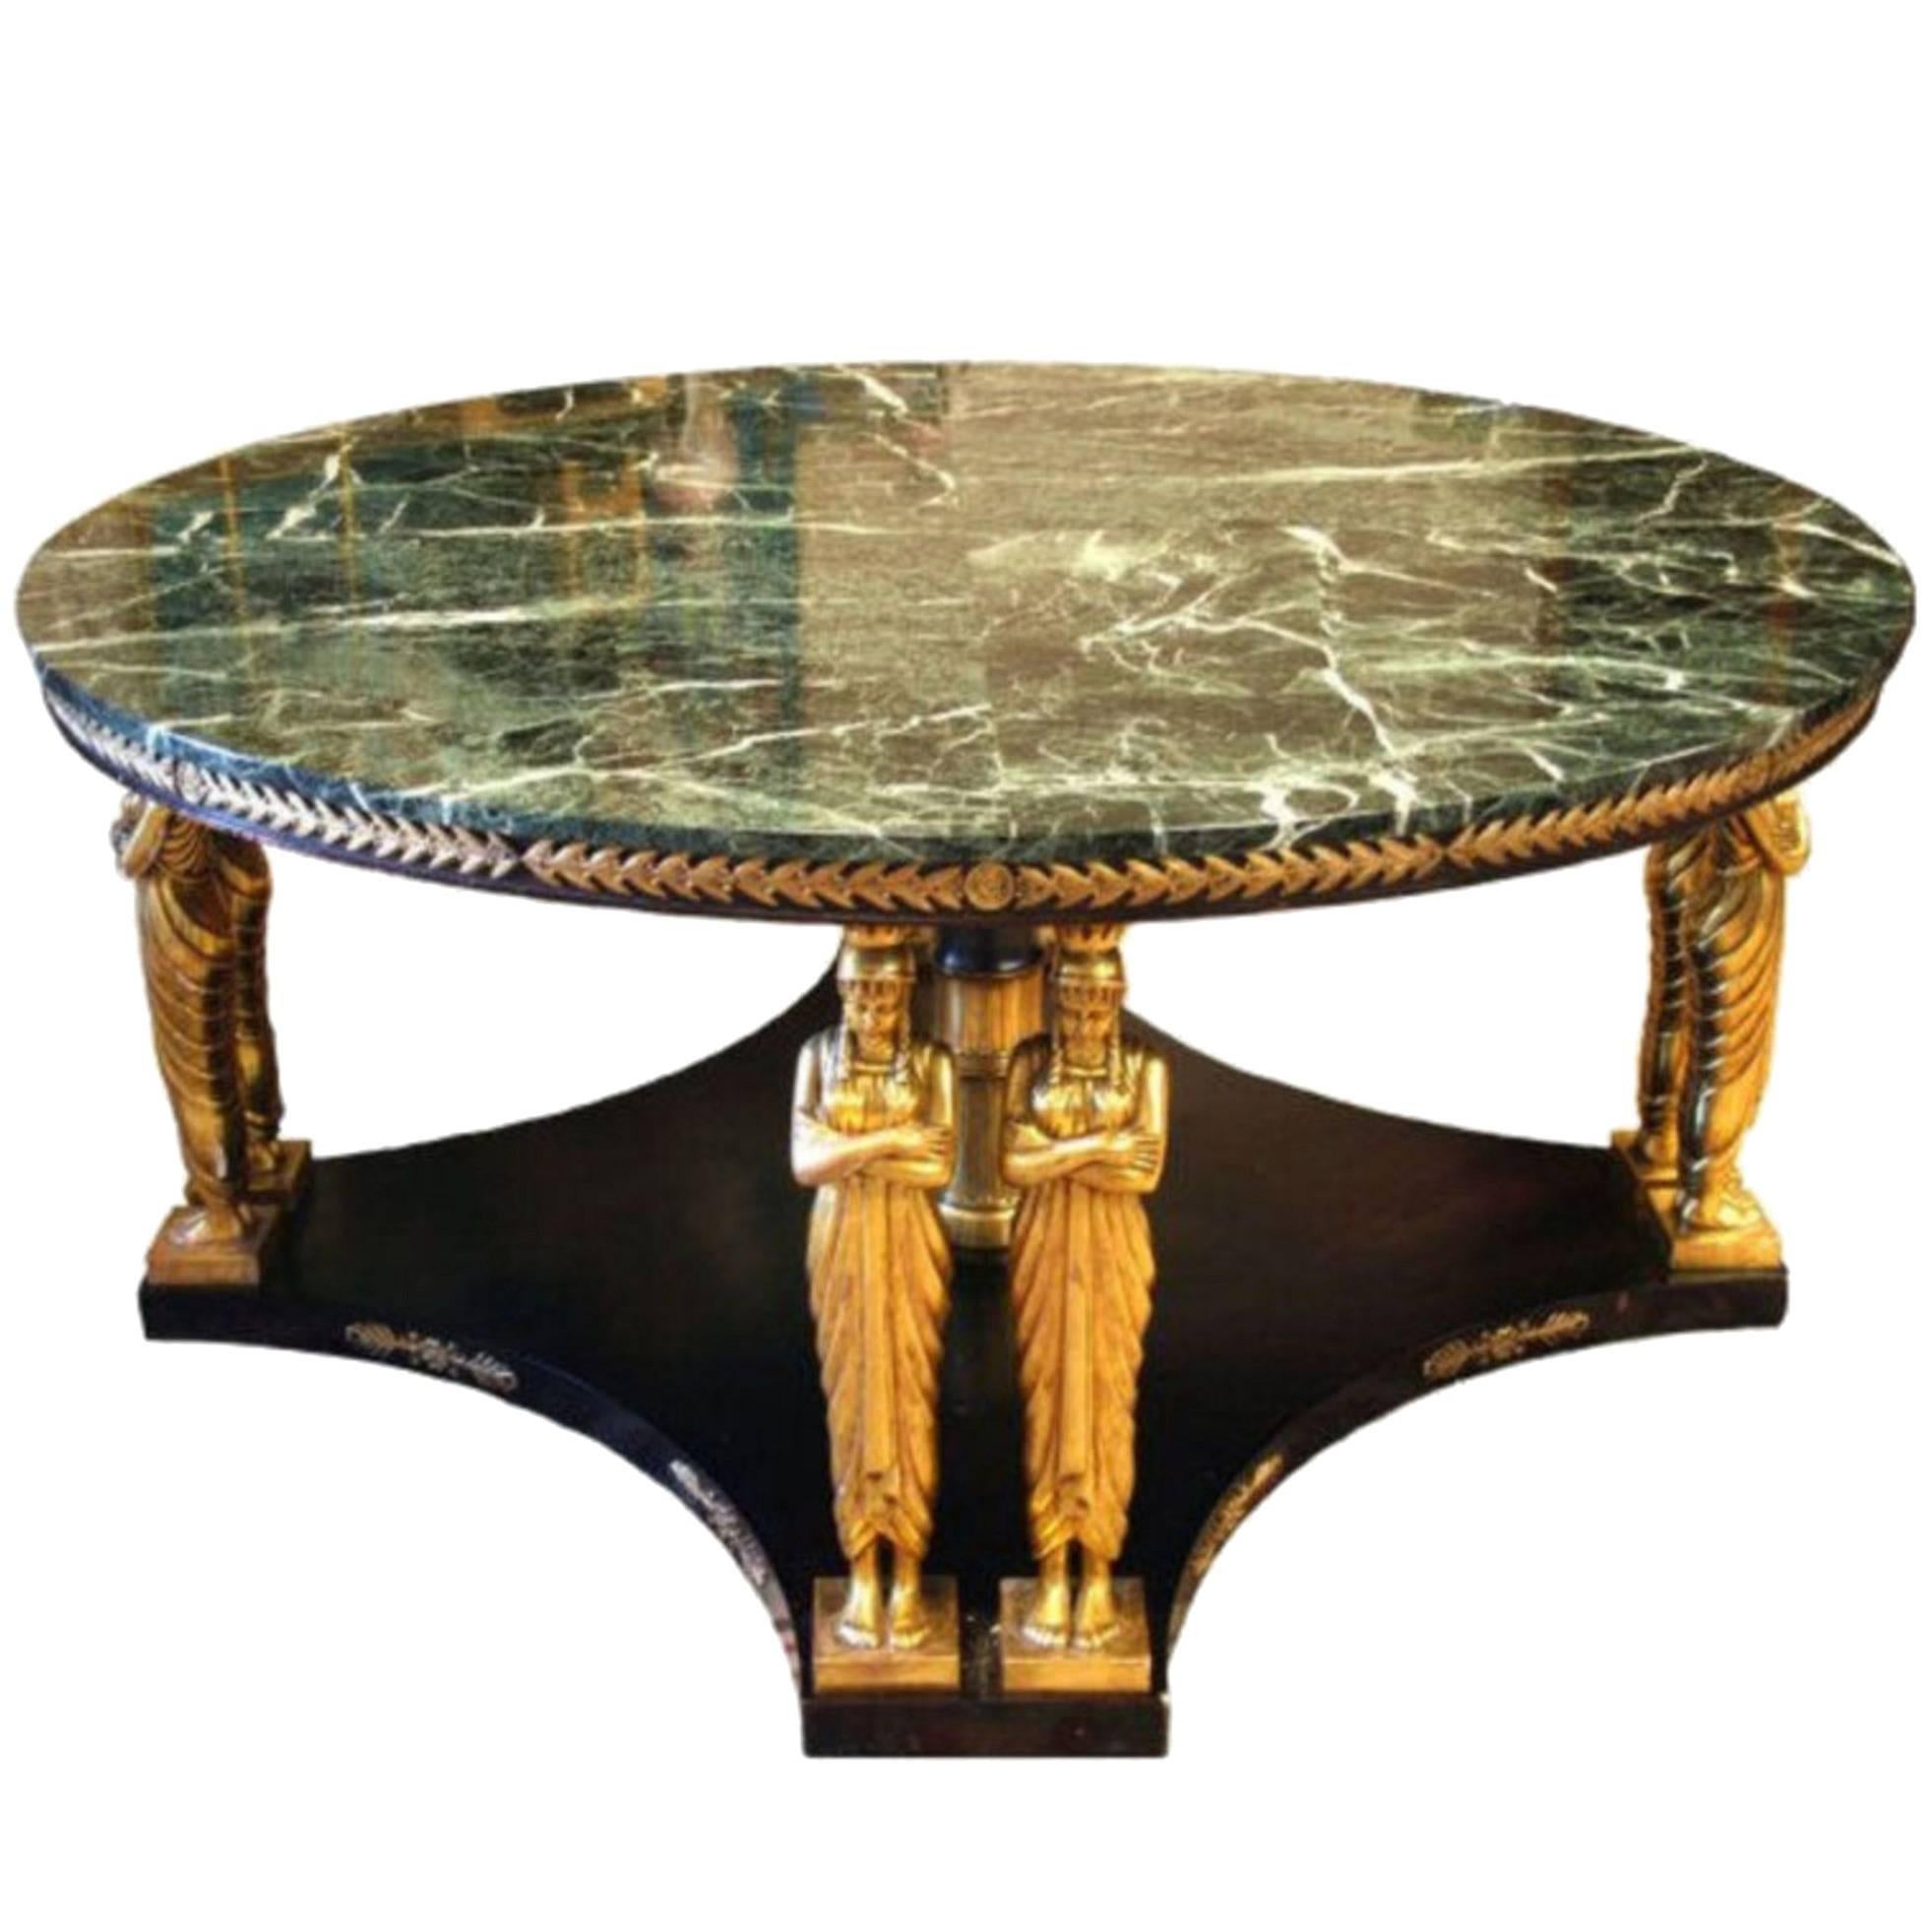 Fine Empire Revival Marble and Mahogany Center Table